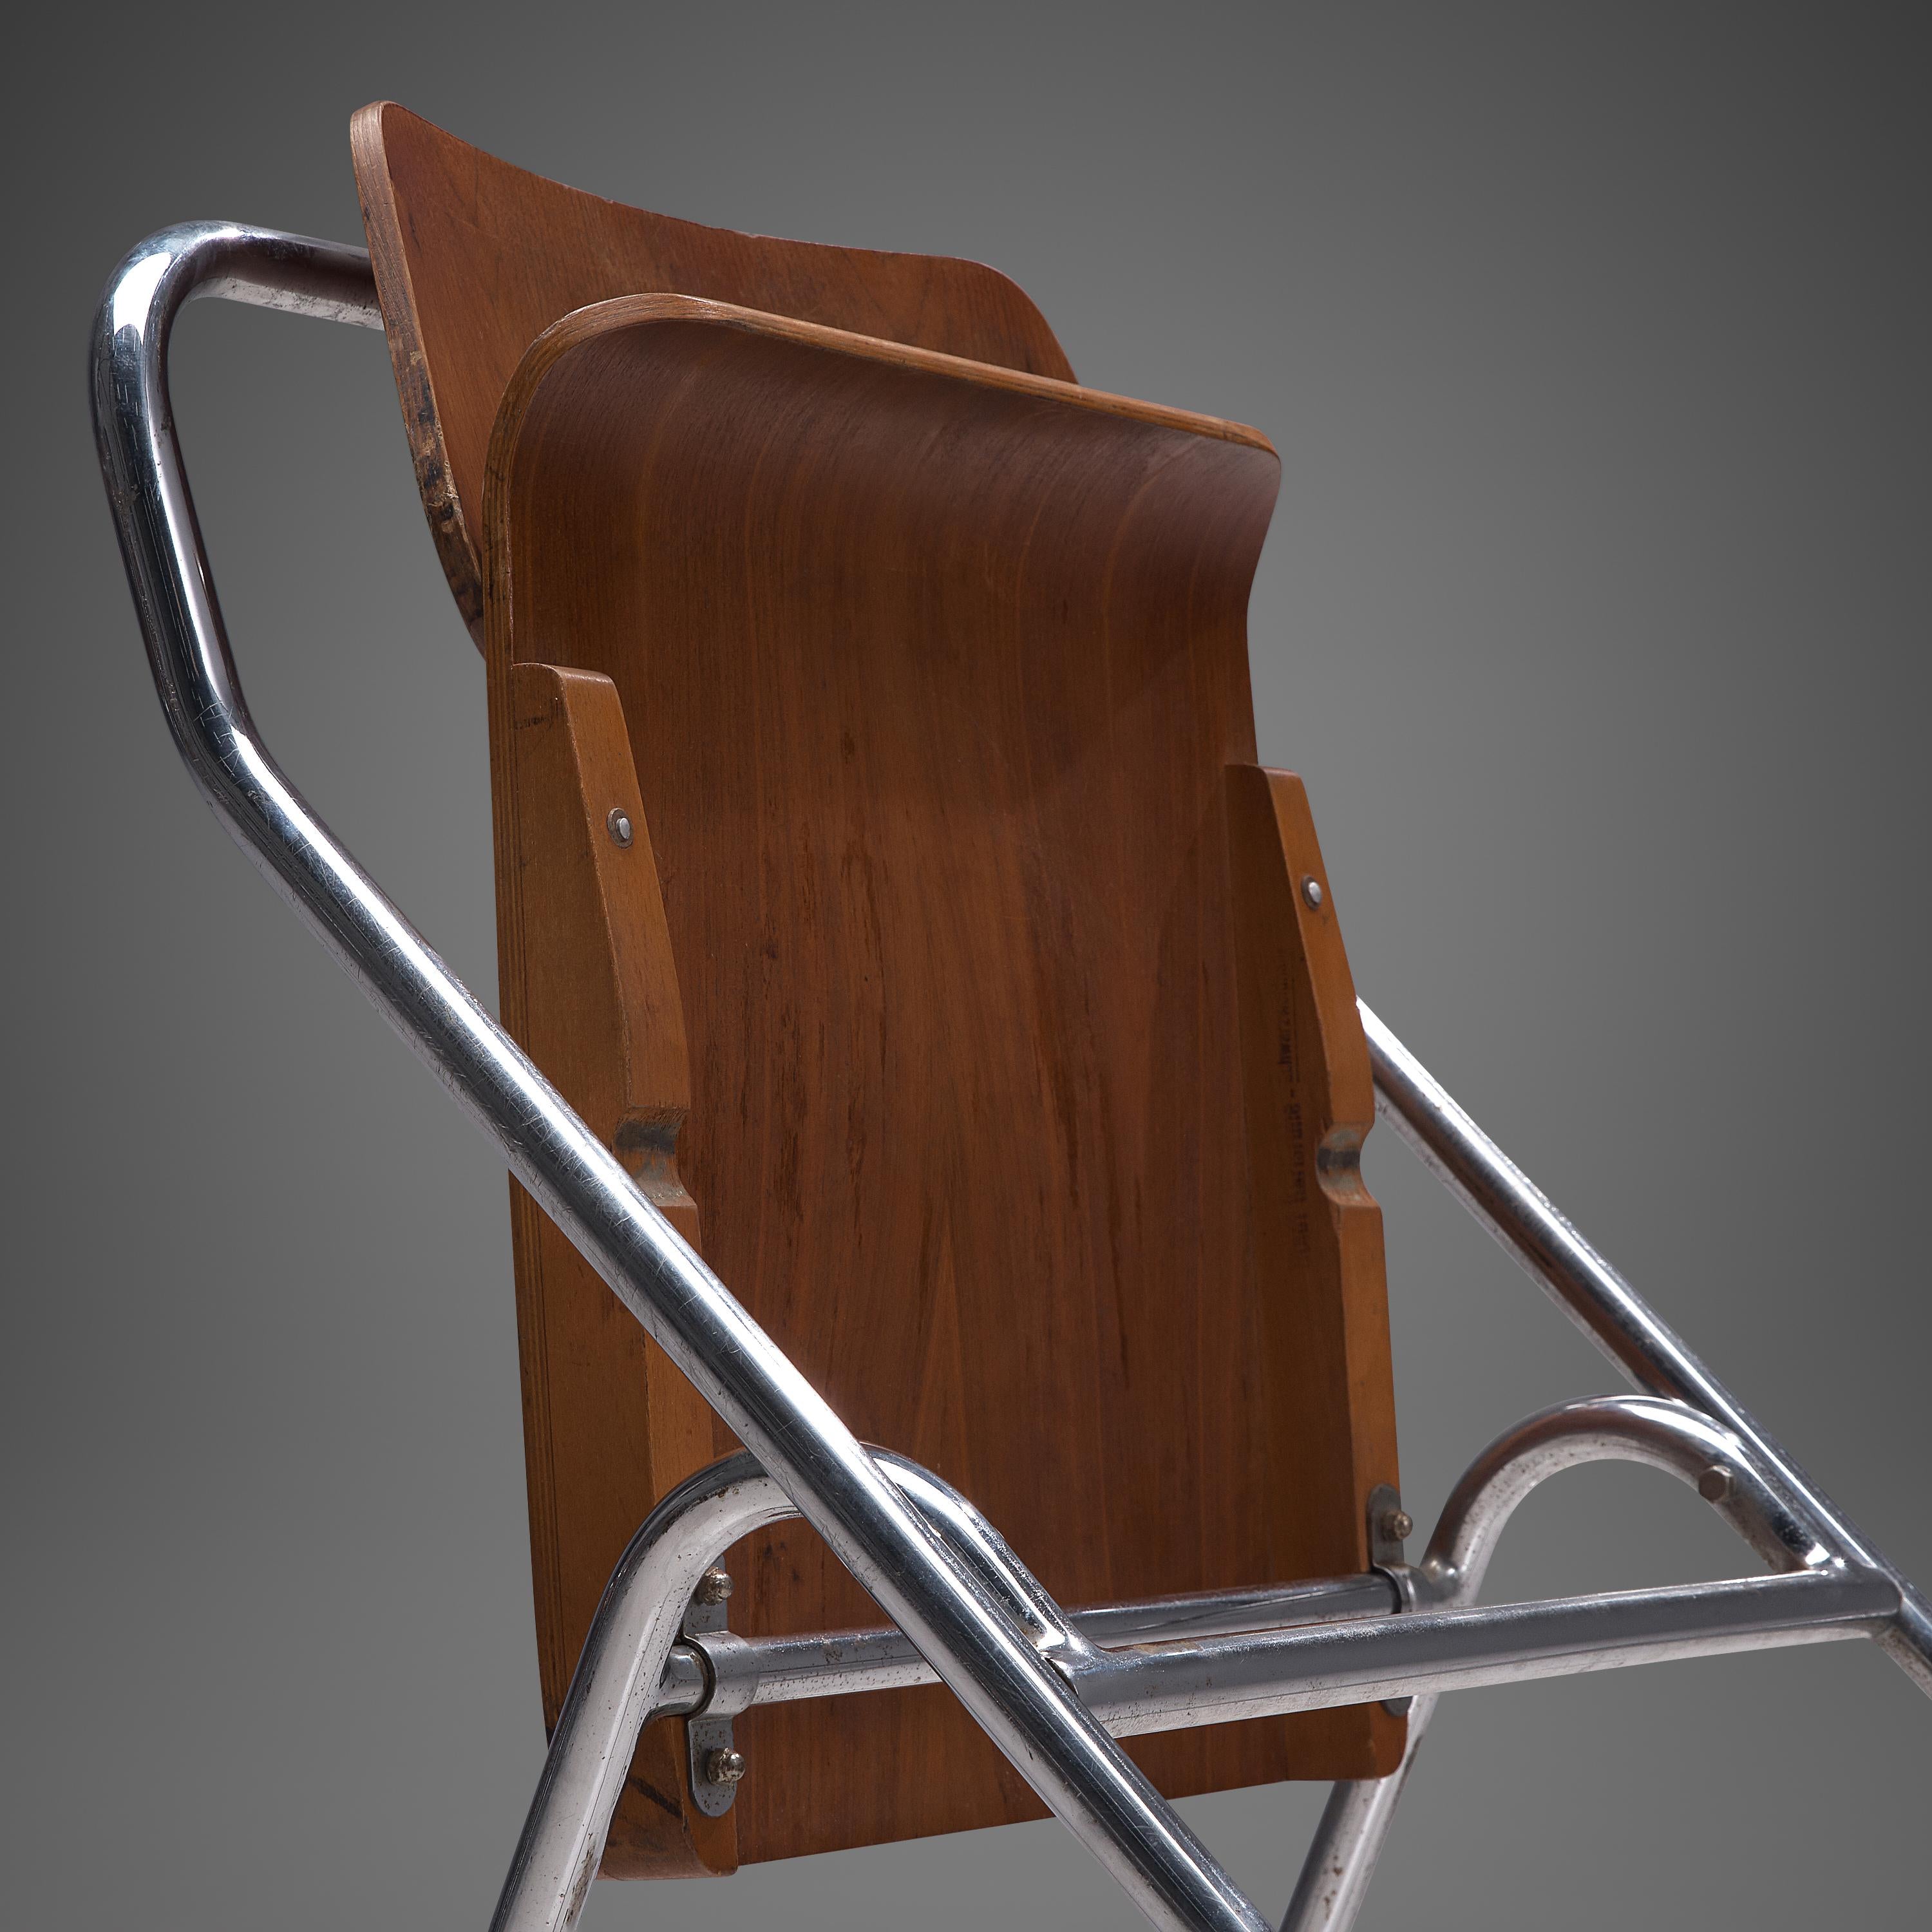 Large Set of Dutch Chairs with Chrome Tubular Frame